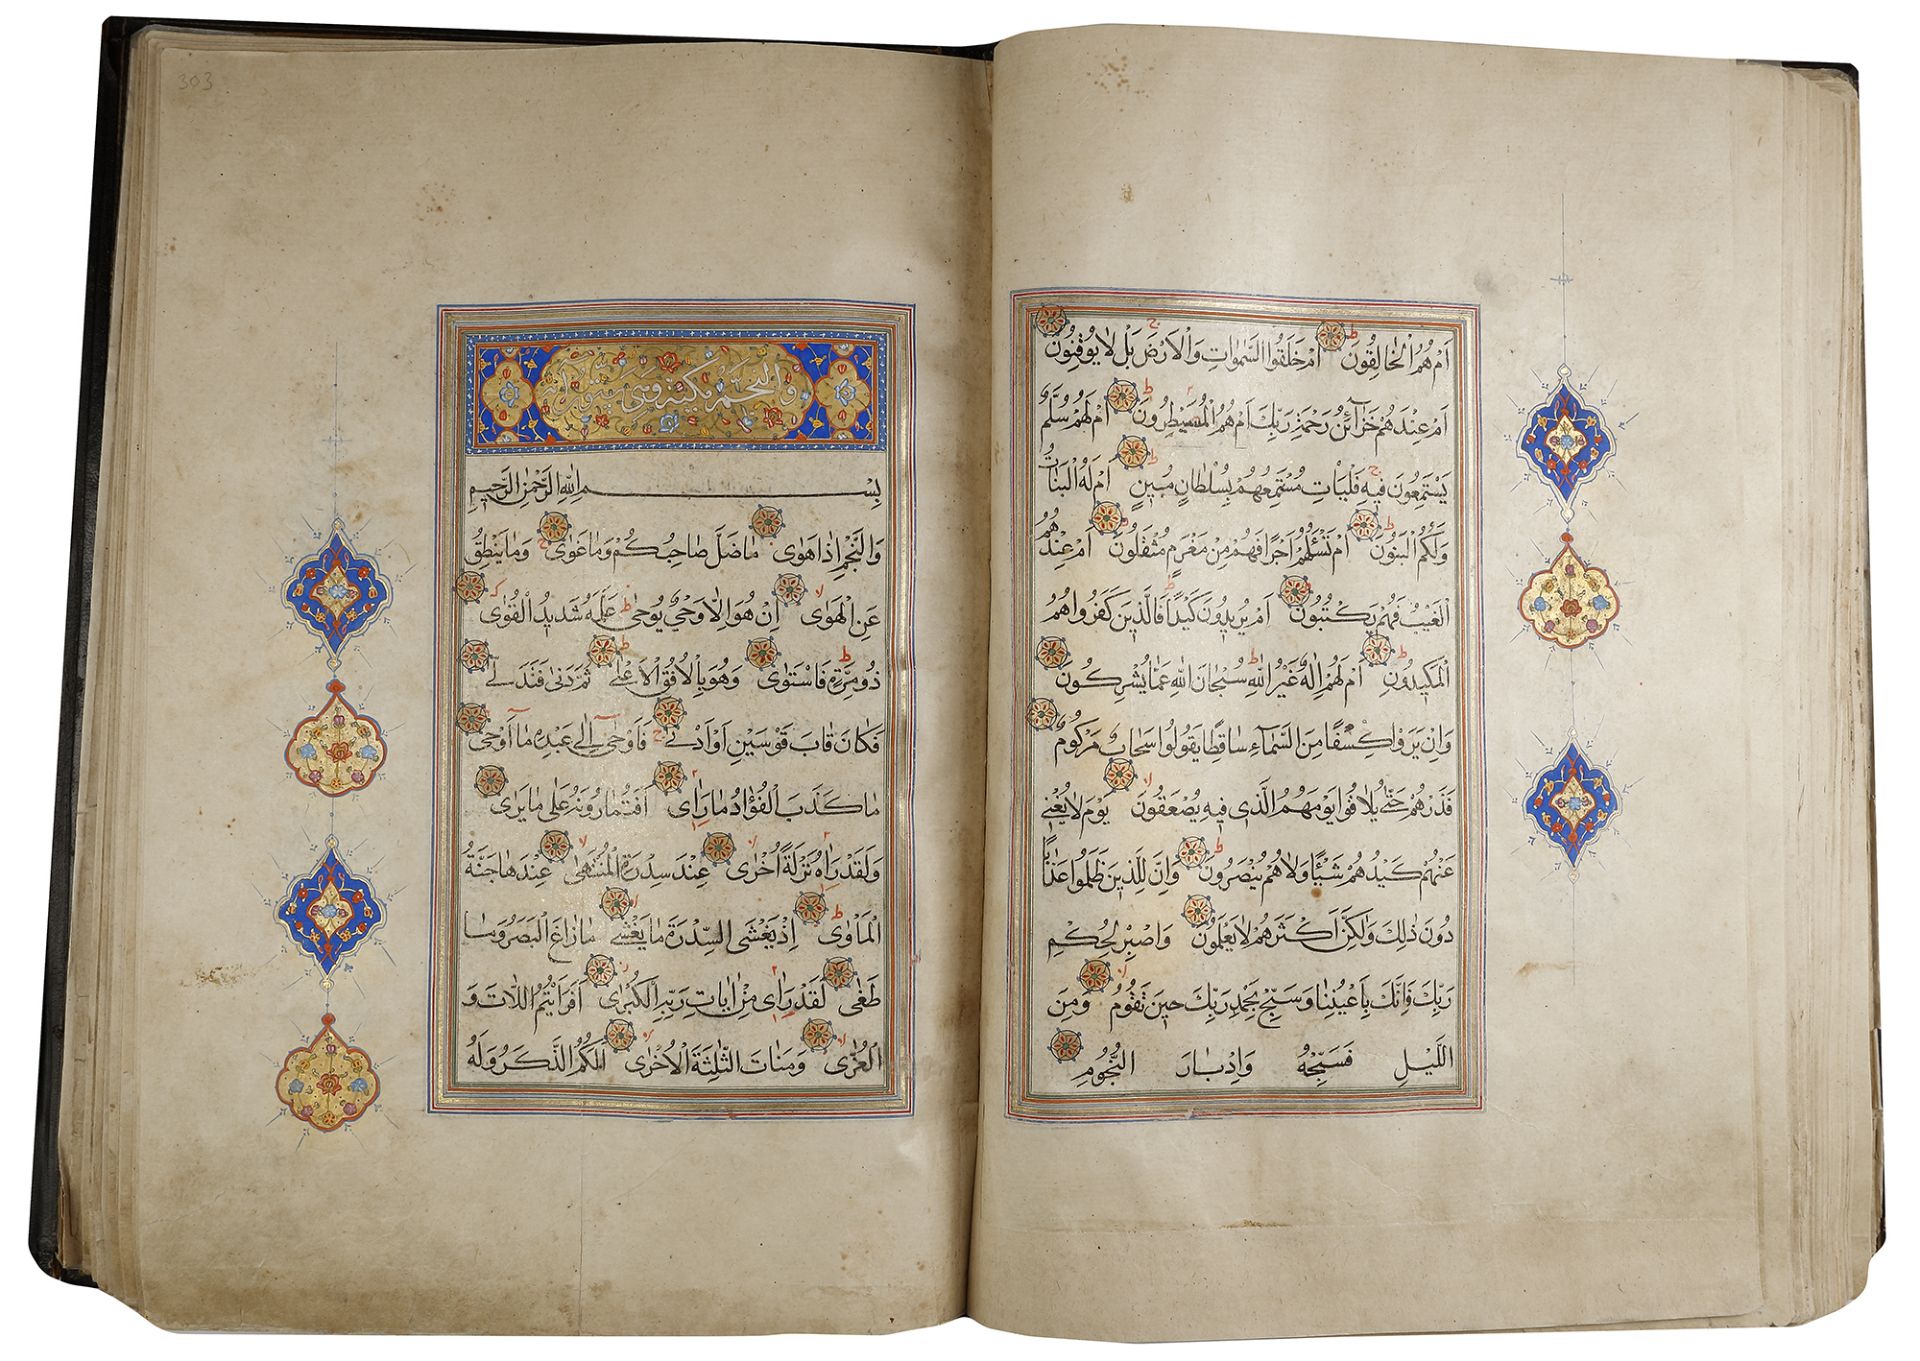 A LARGE ILLUMINATED QURAN, COPIED BY 'ALA'-AL-DIN MUHAMMAD AL-TABRIZI SAFAVID, PERSIA, 16TH CENT - Image 18 of 26